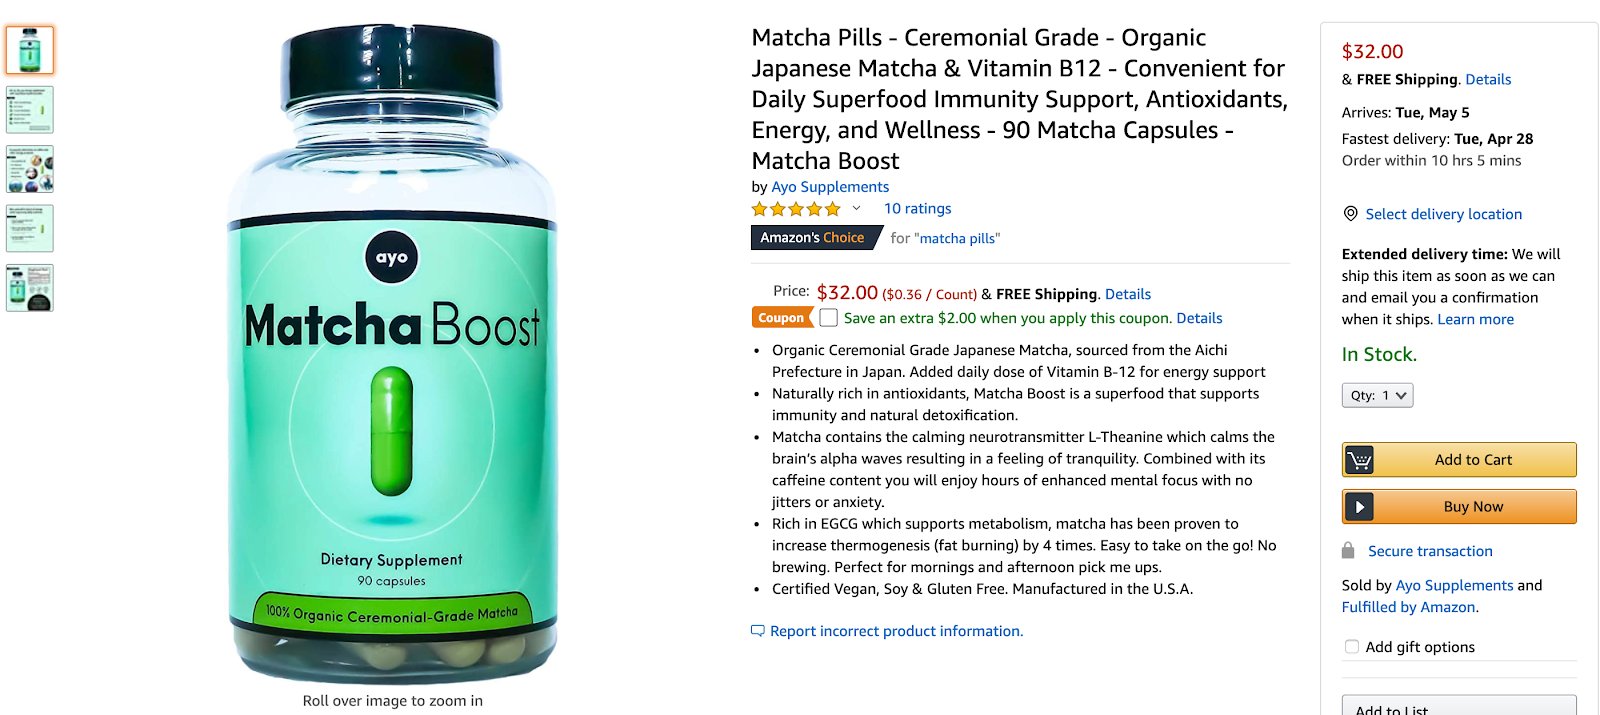 on-starting-a-2k-month-premium-matcha-supplements-brand